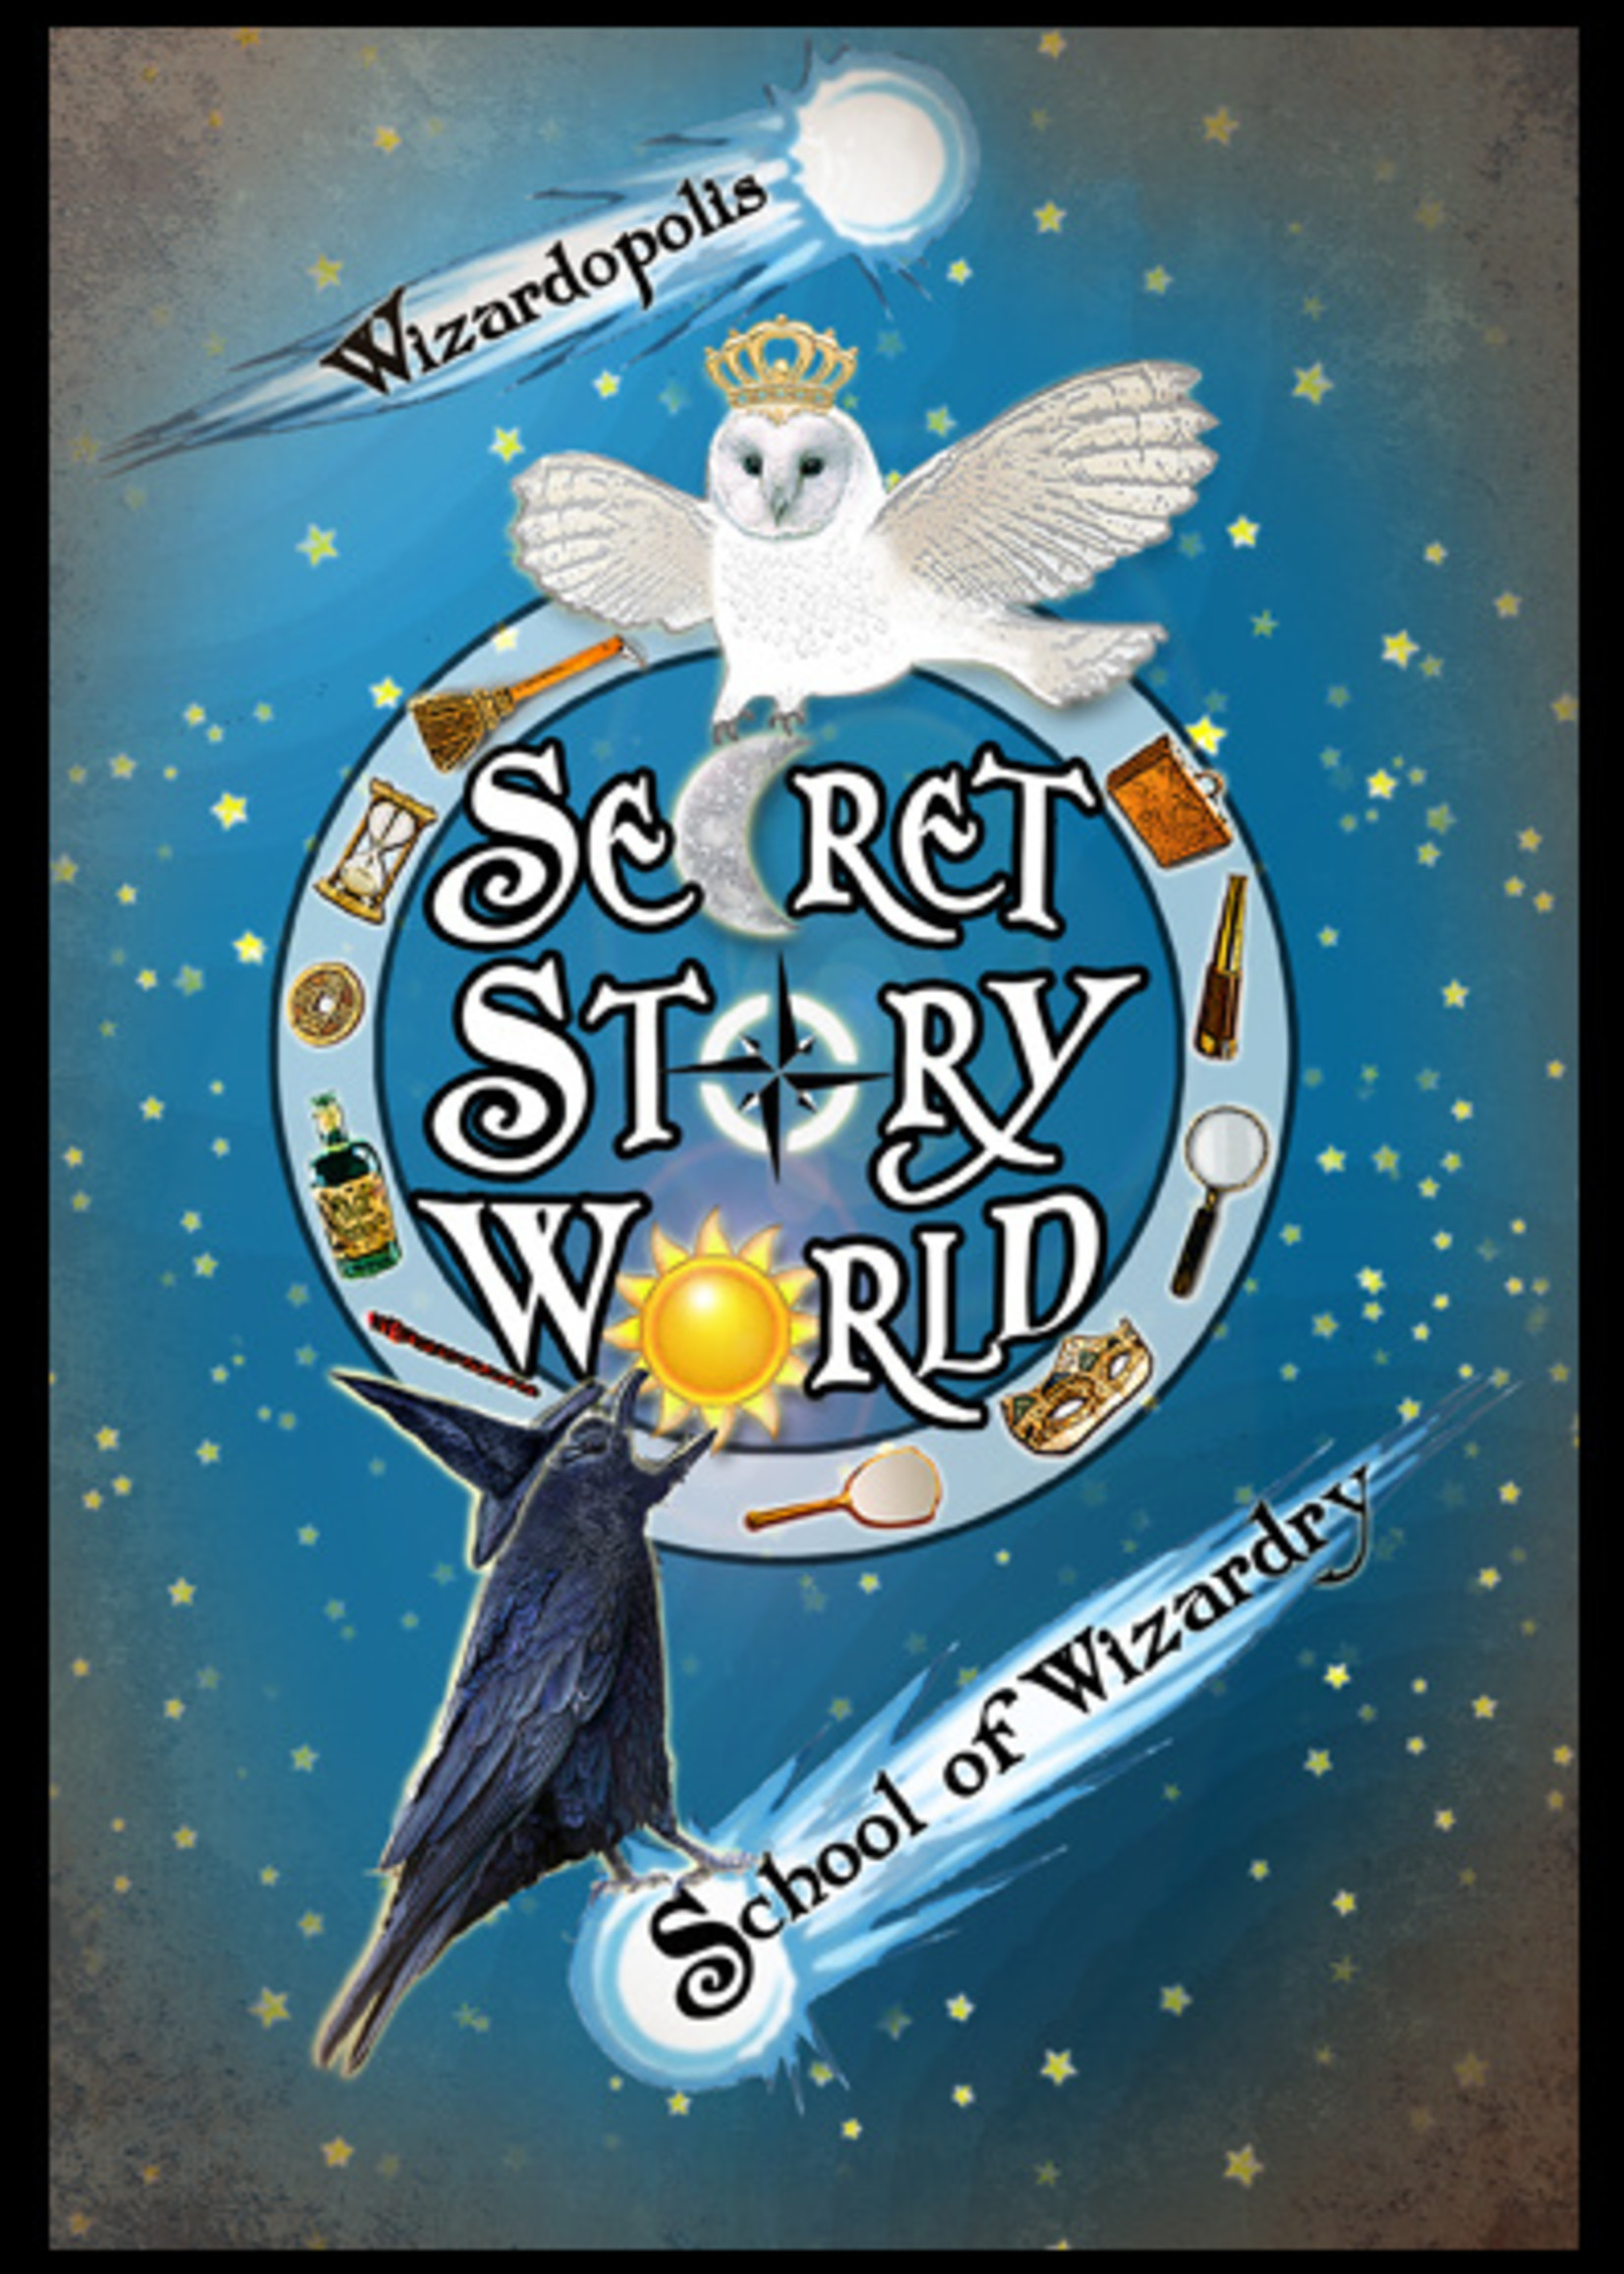 TreeHouse Book Kit - Wizard School Magic